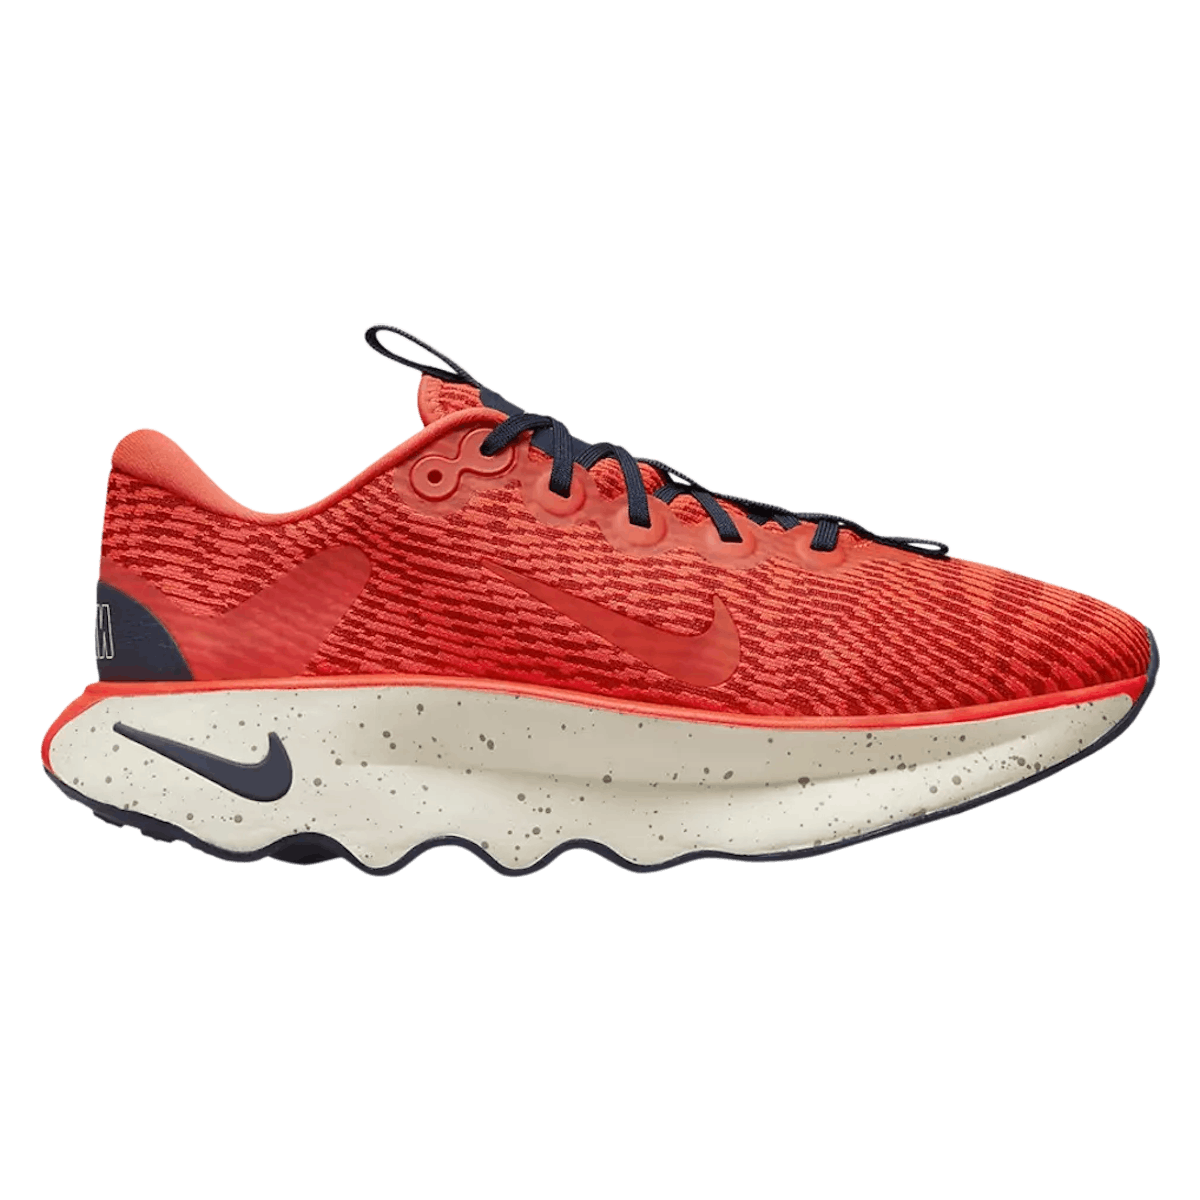 Nike Motiva "Bright Crimson"